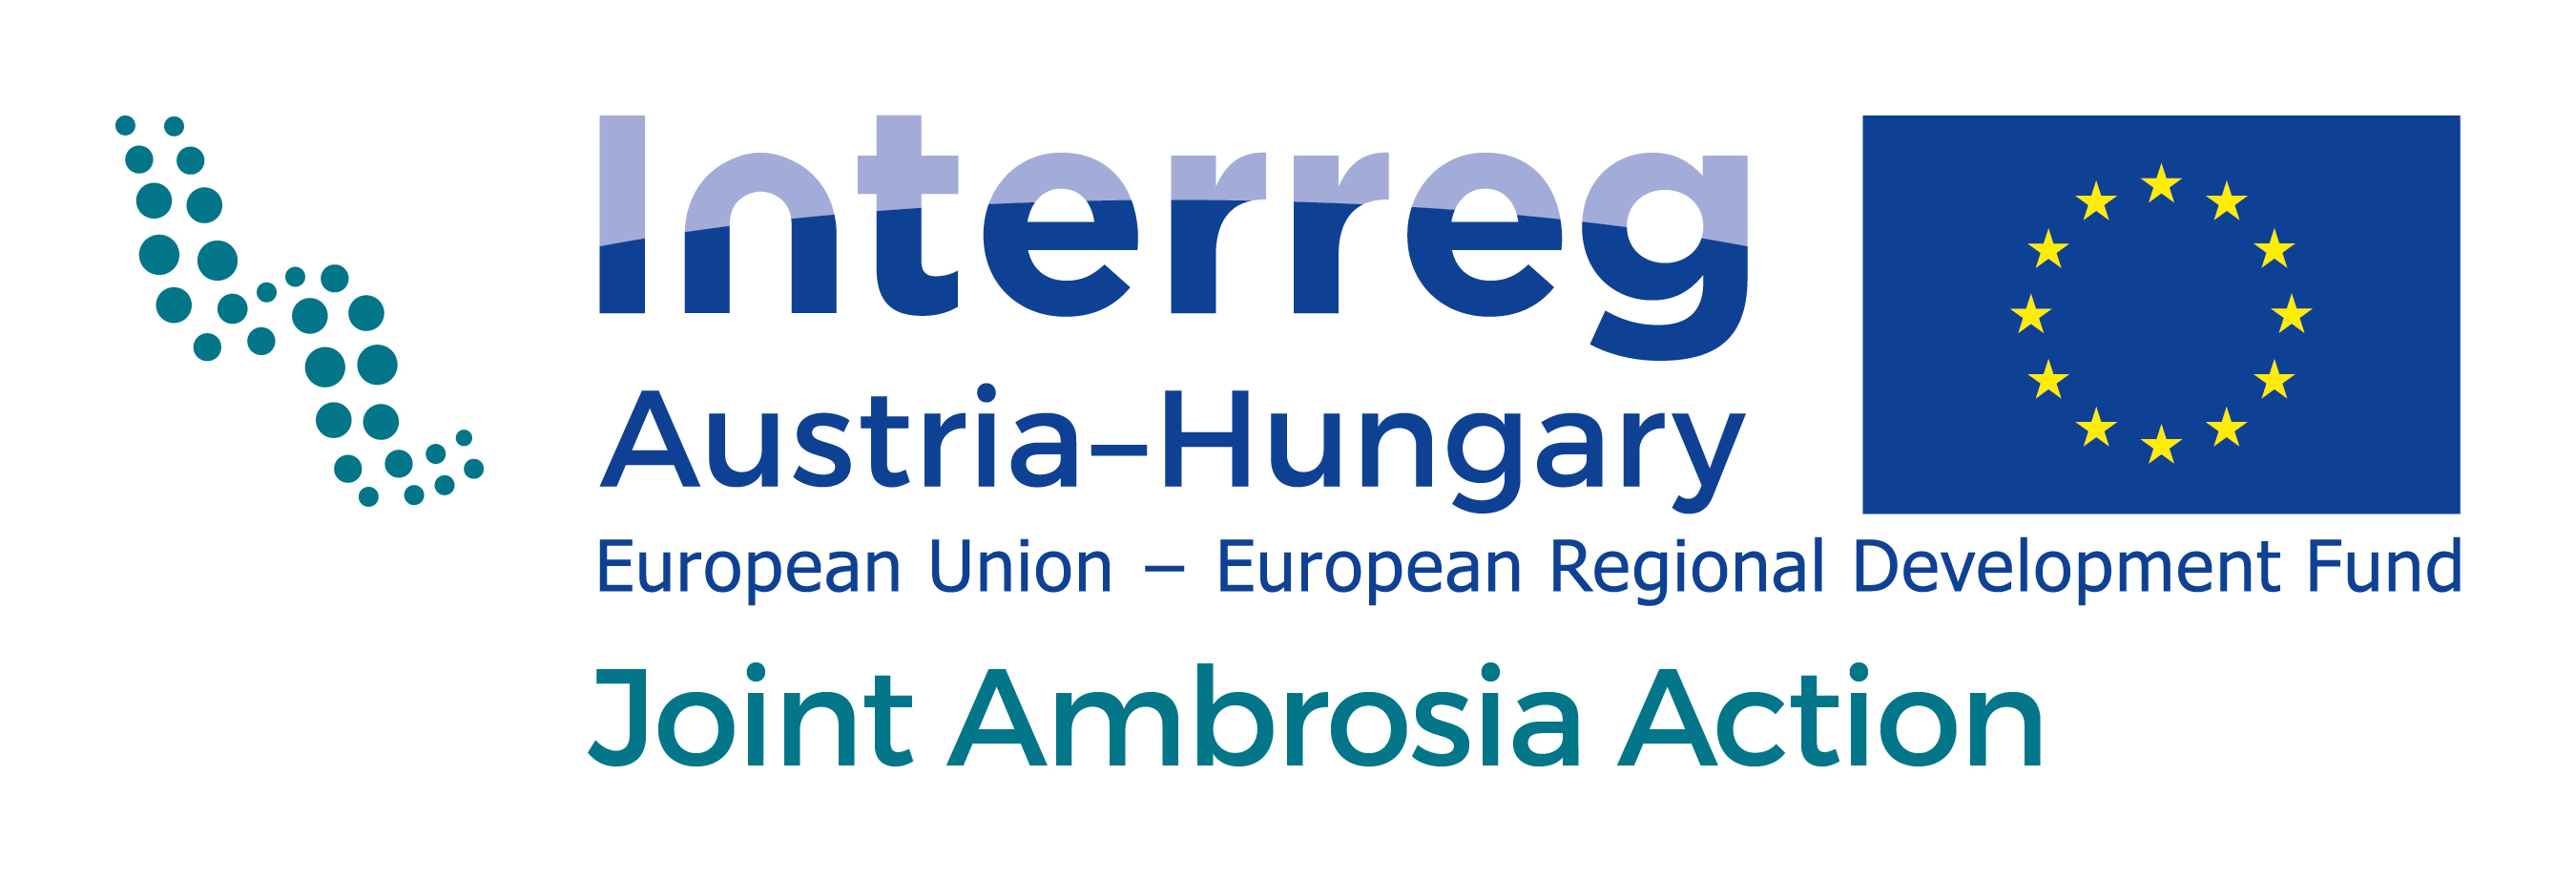 Projectlogo Interreg AT-HU_Joint Ambrosia Action_rgb.jpg